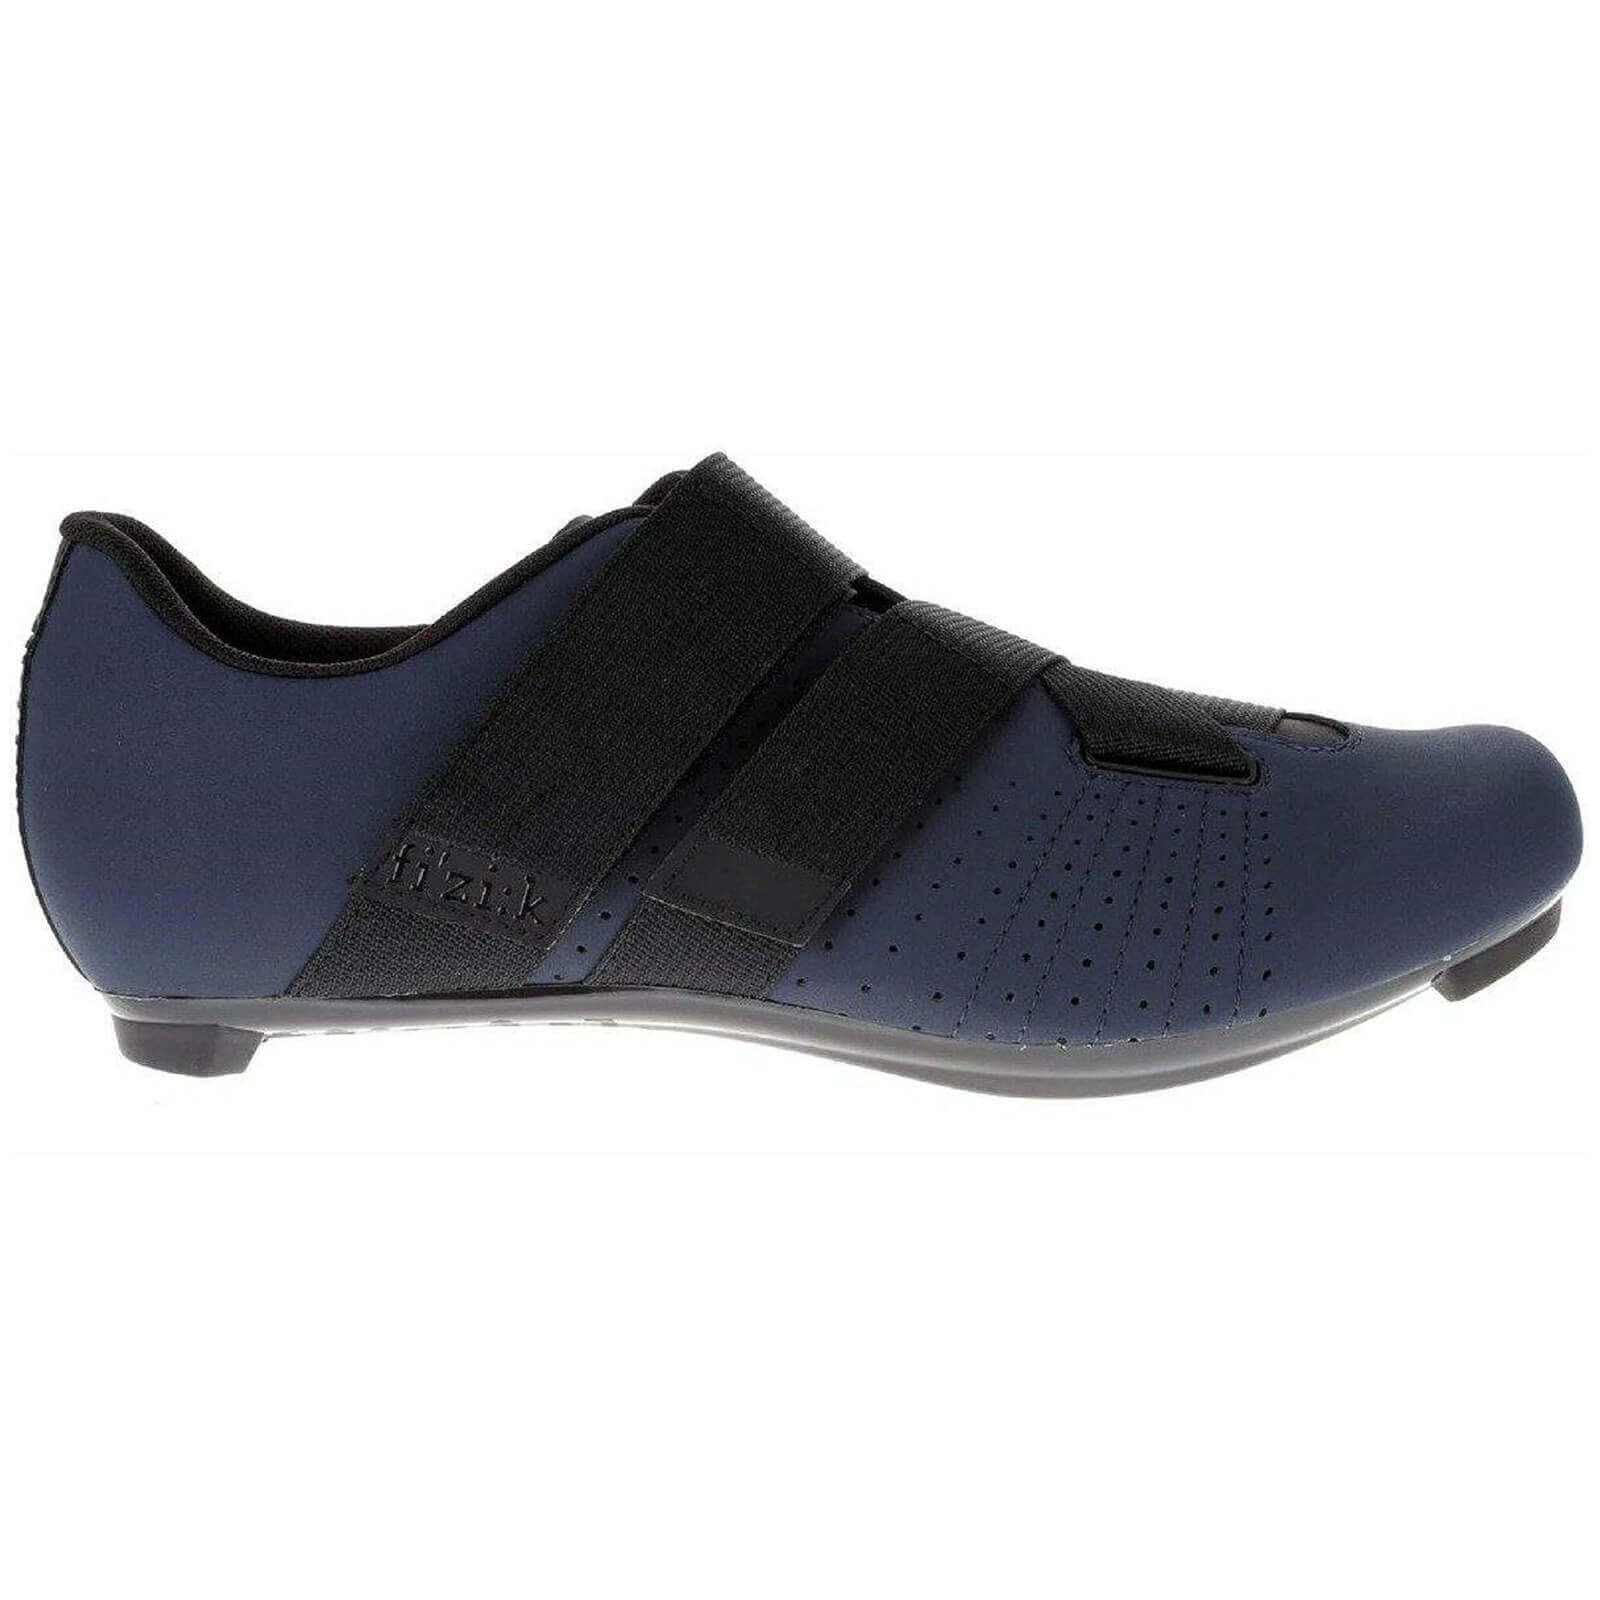 Fizik Tempo Powerstrap R5 Road Shoes - EU 36 - Navy/Black